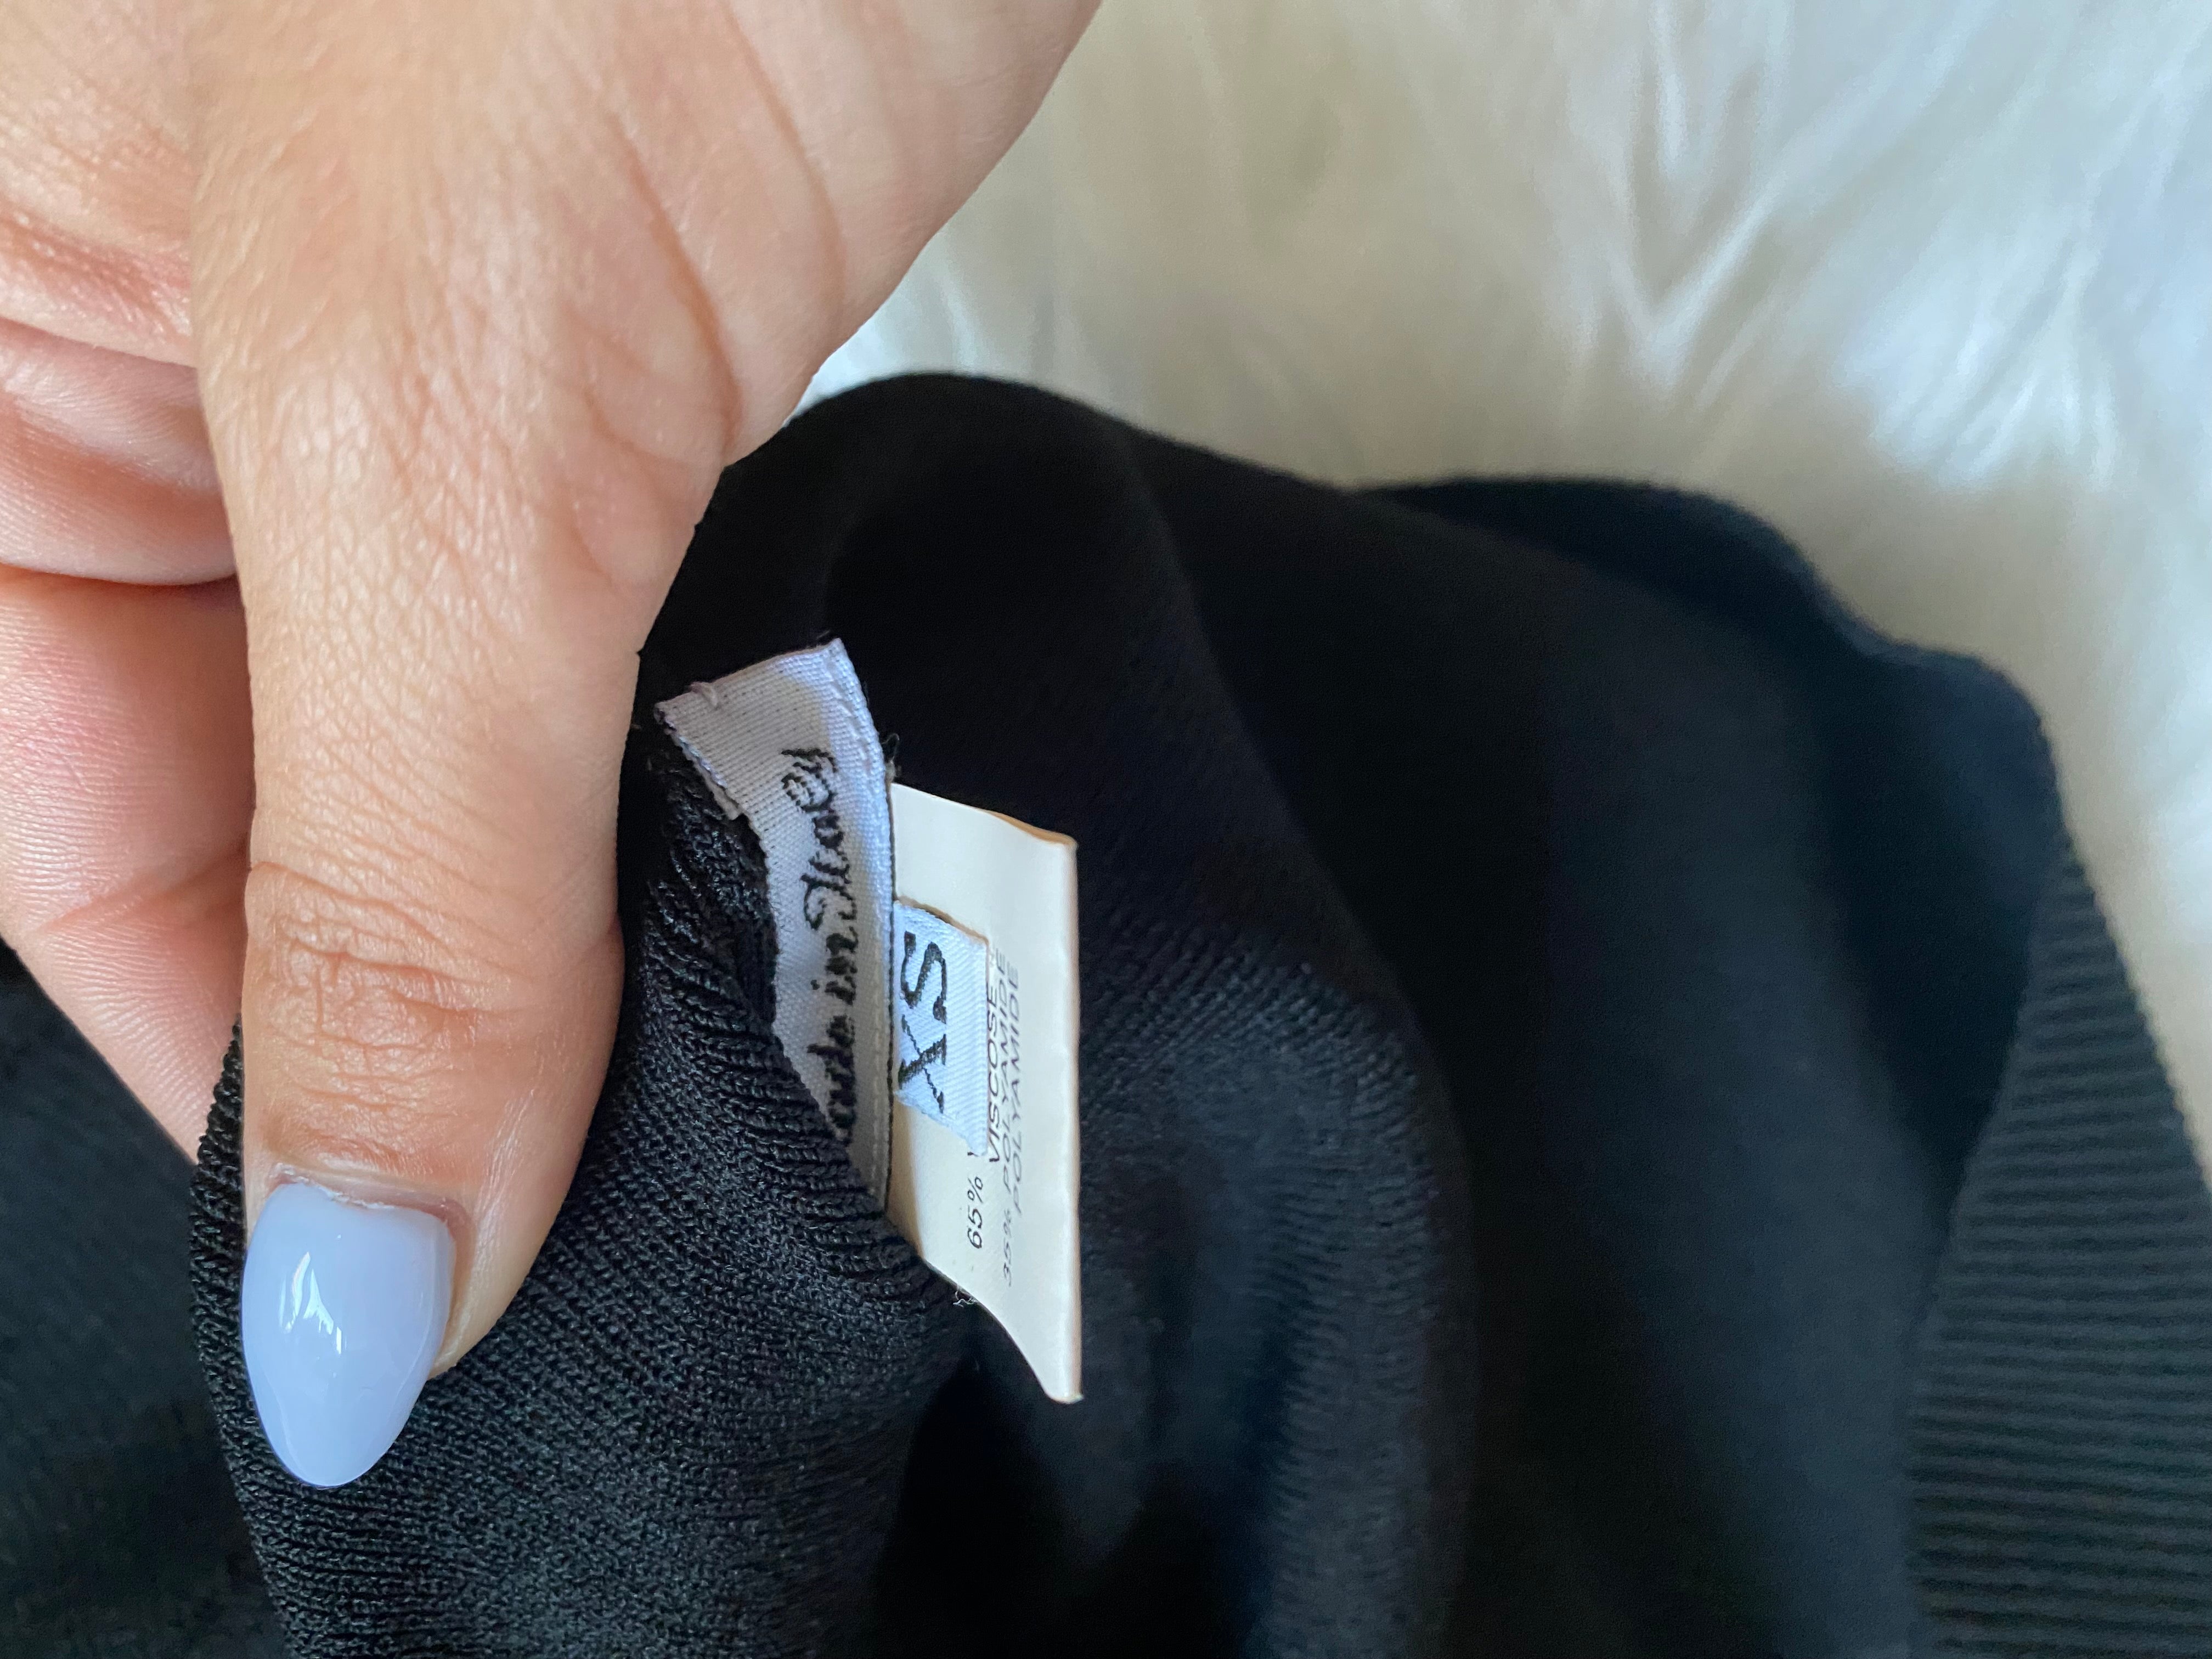 Louis Vuitton uniform cardigan – Beccas Bags